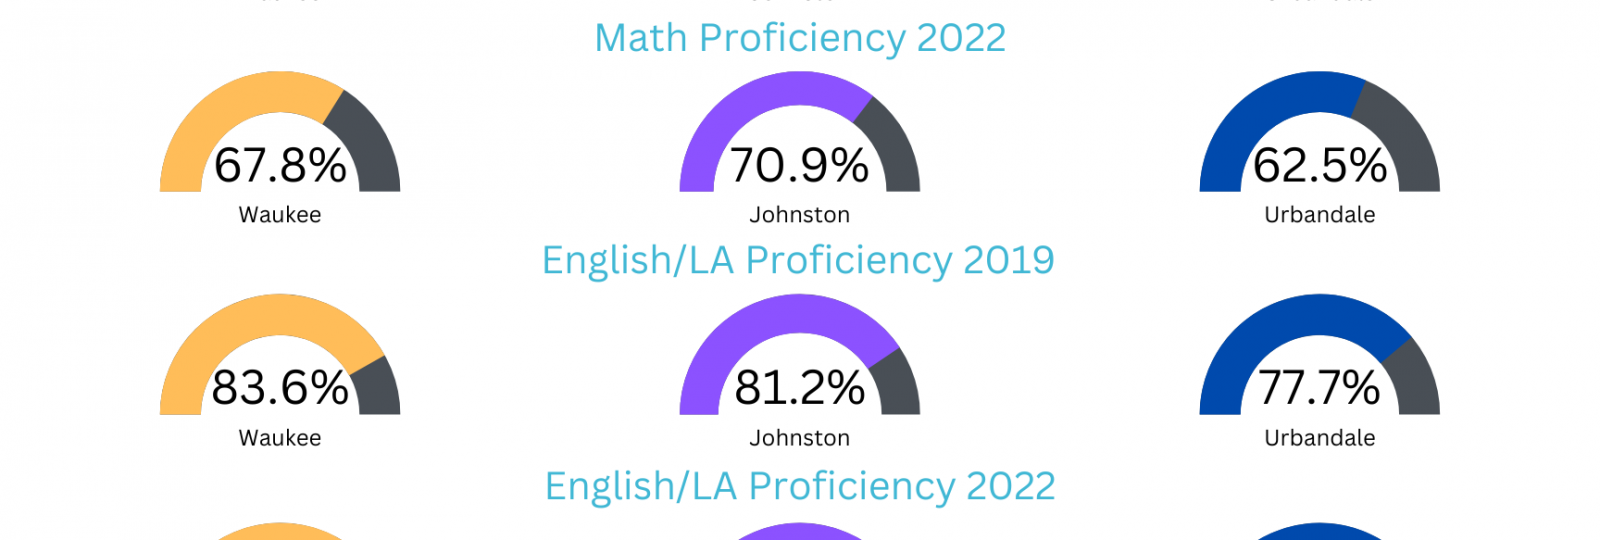 Suburban ProficiencyGrowth Statistics 2019 v. 2022